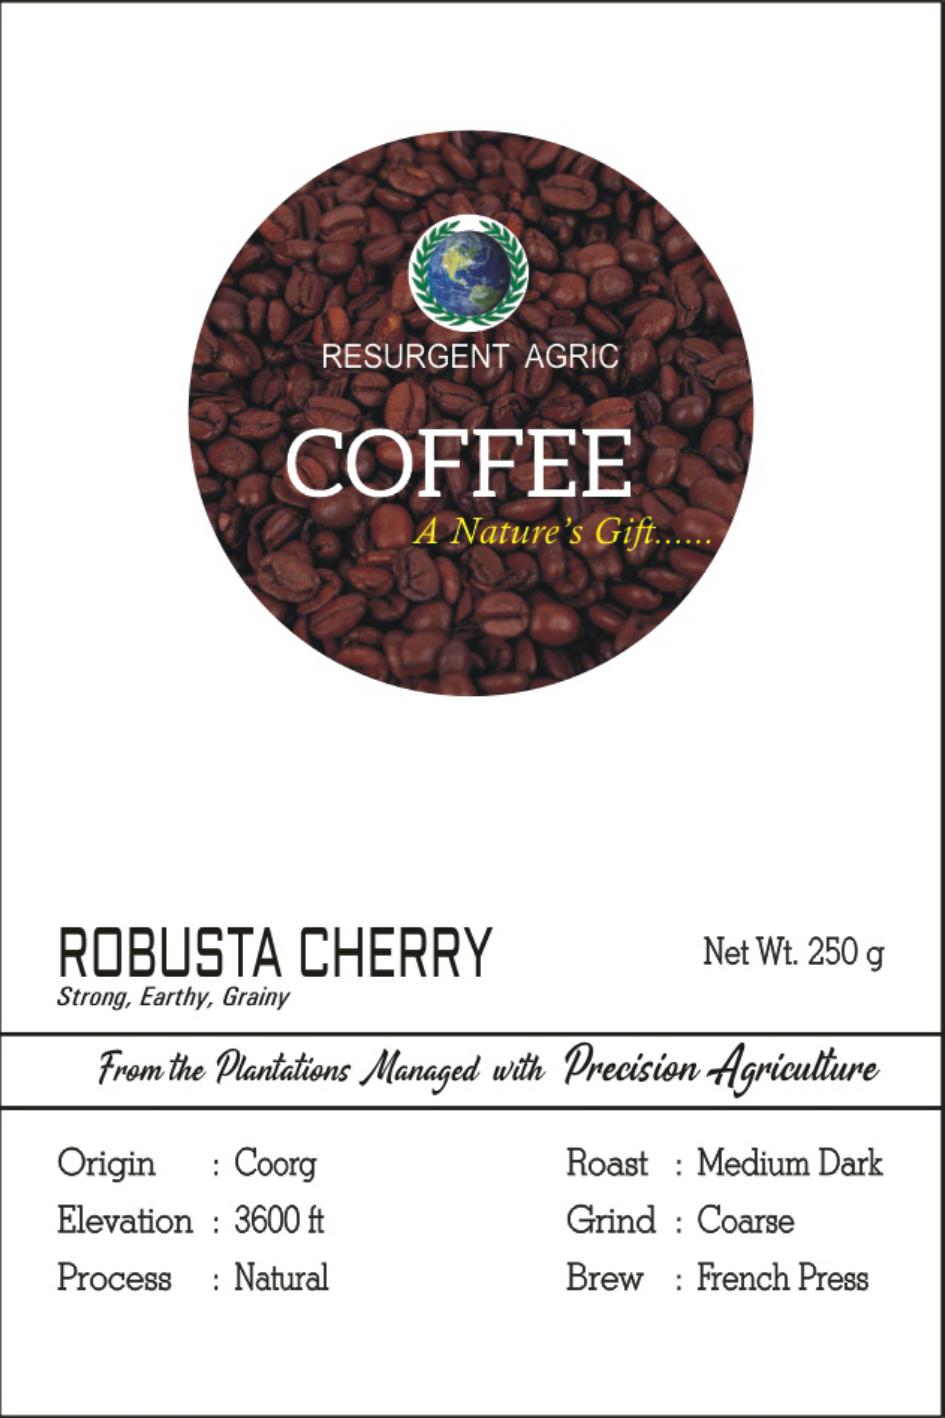 Robusta Cherry (Medium Dark - Coarse)